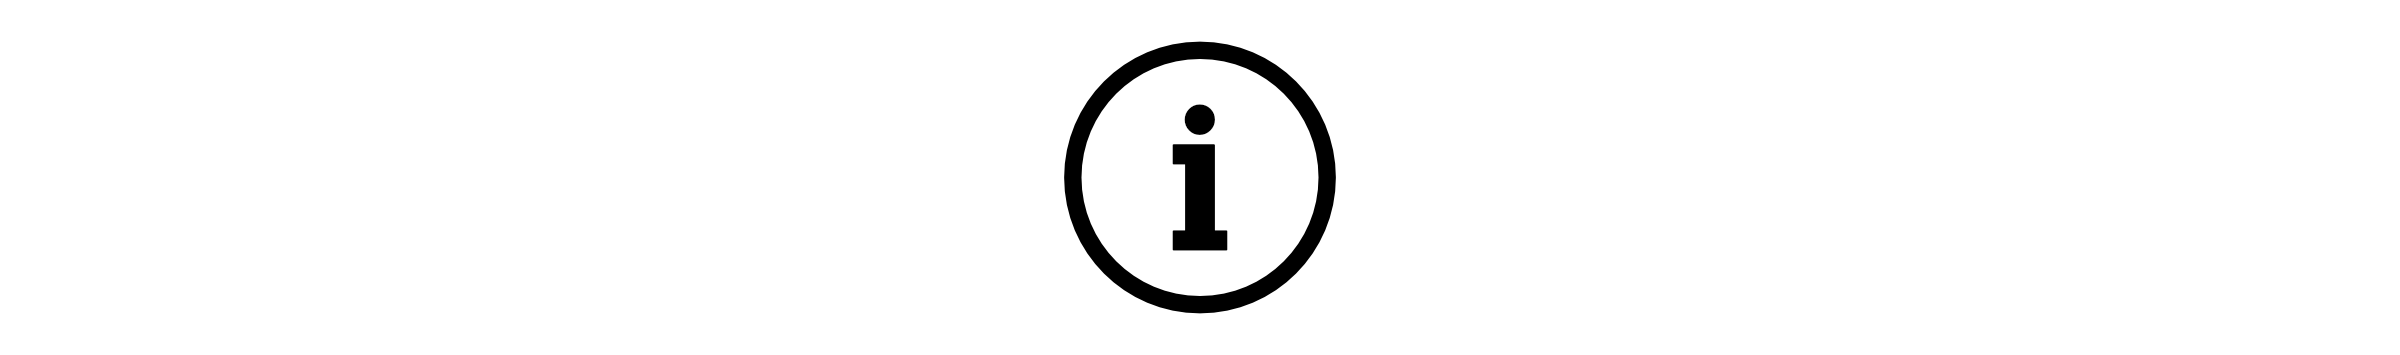 info-banner-information-symbol